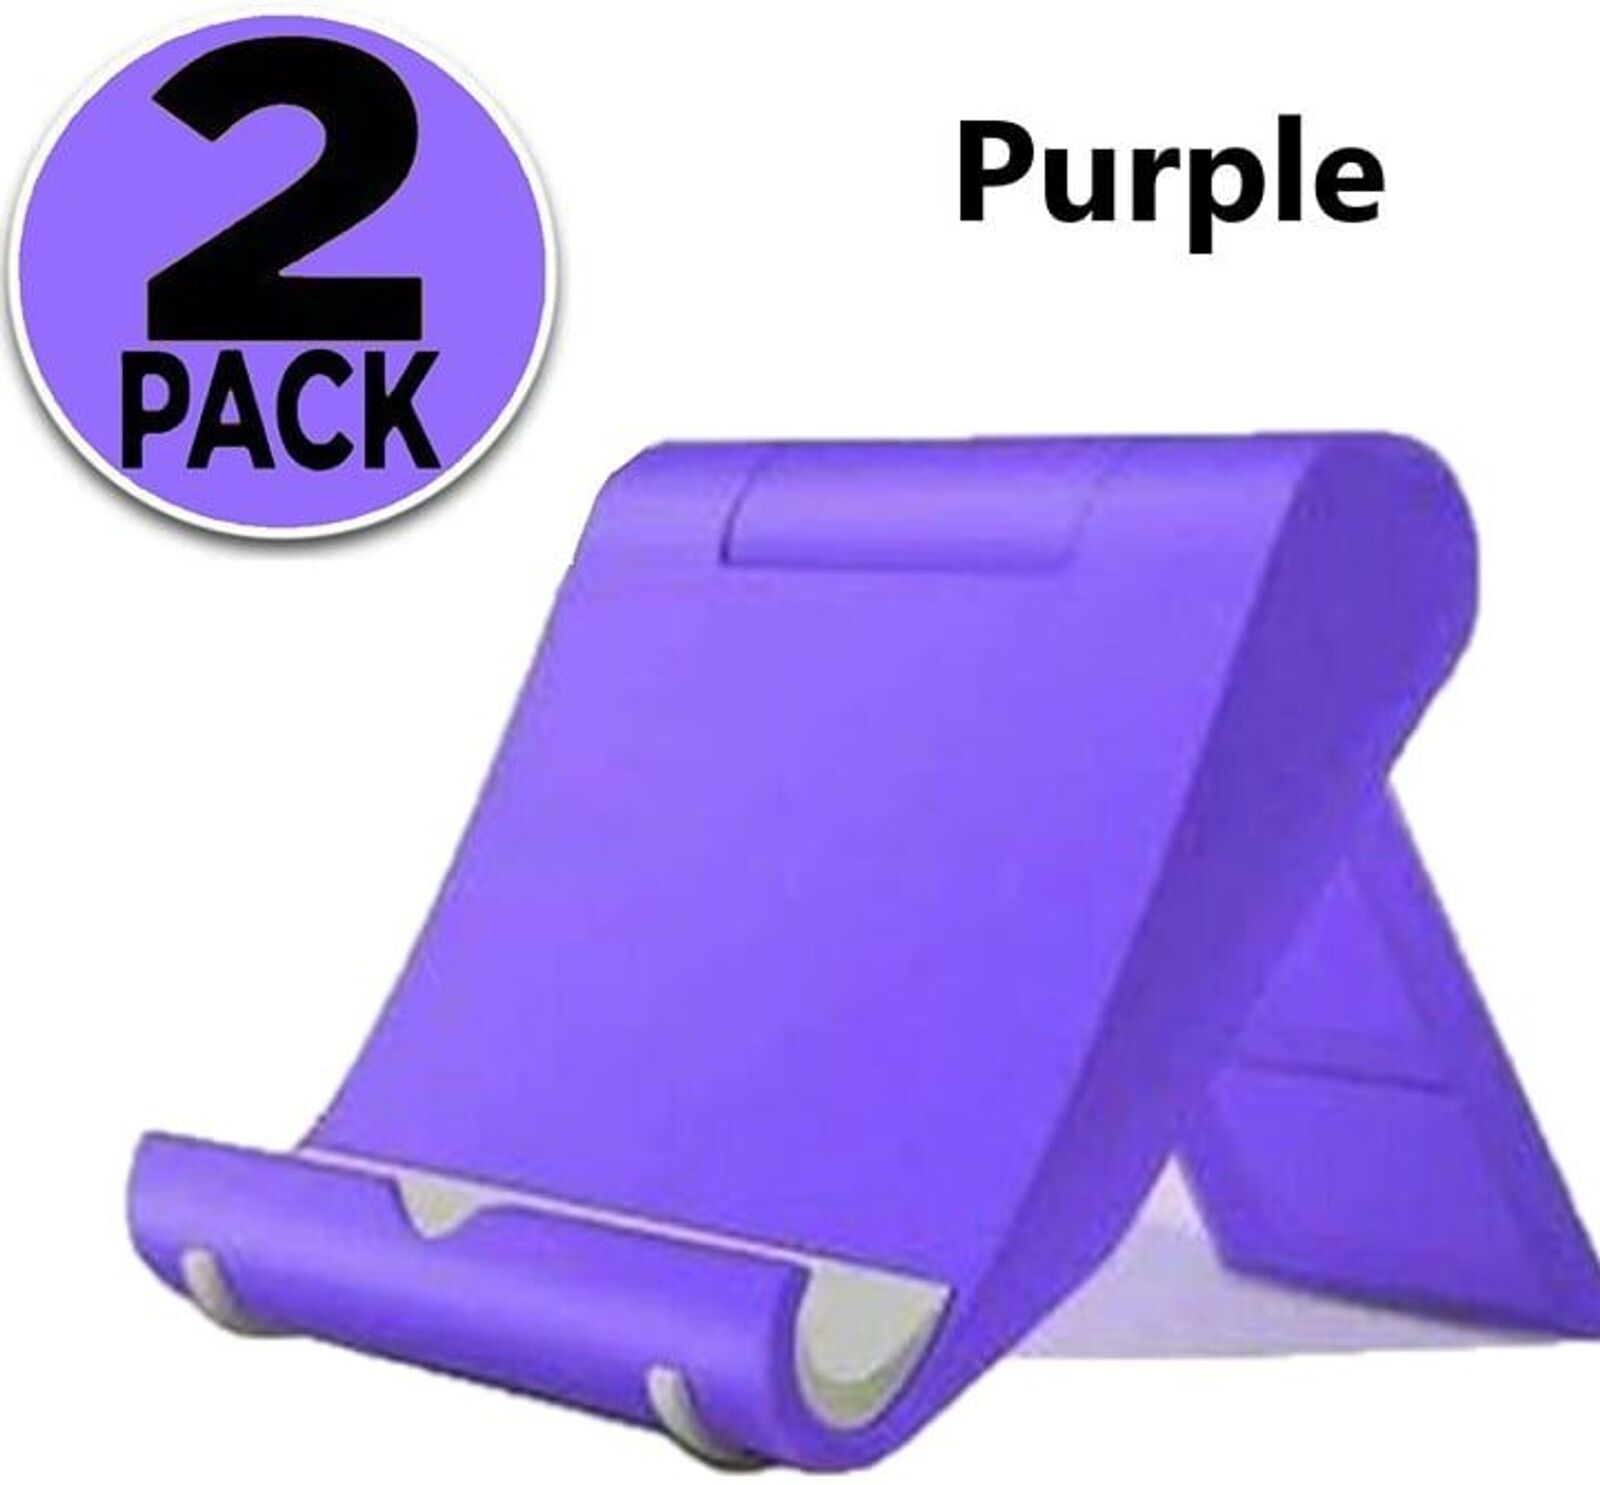 Purple 2 Pack Cell Phone Tablet Holder Stand Dock Cradle Adjustable Plastic